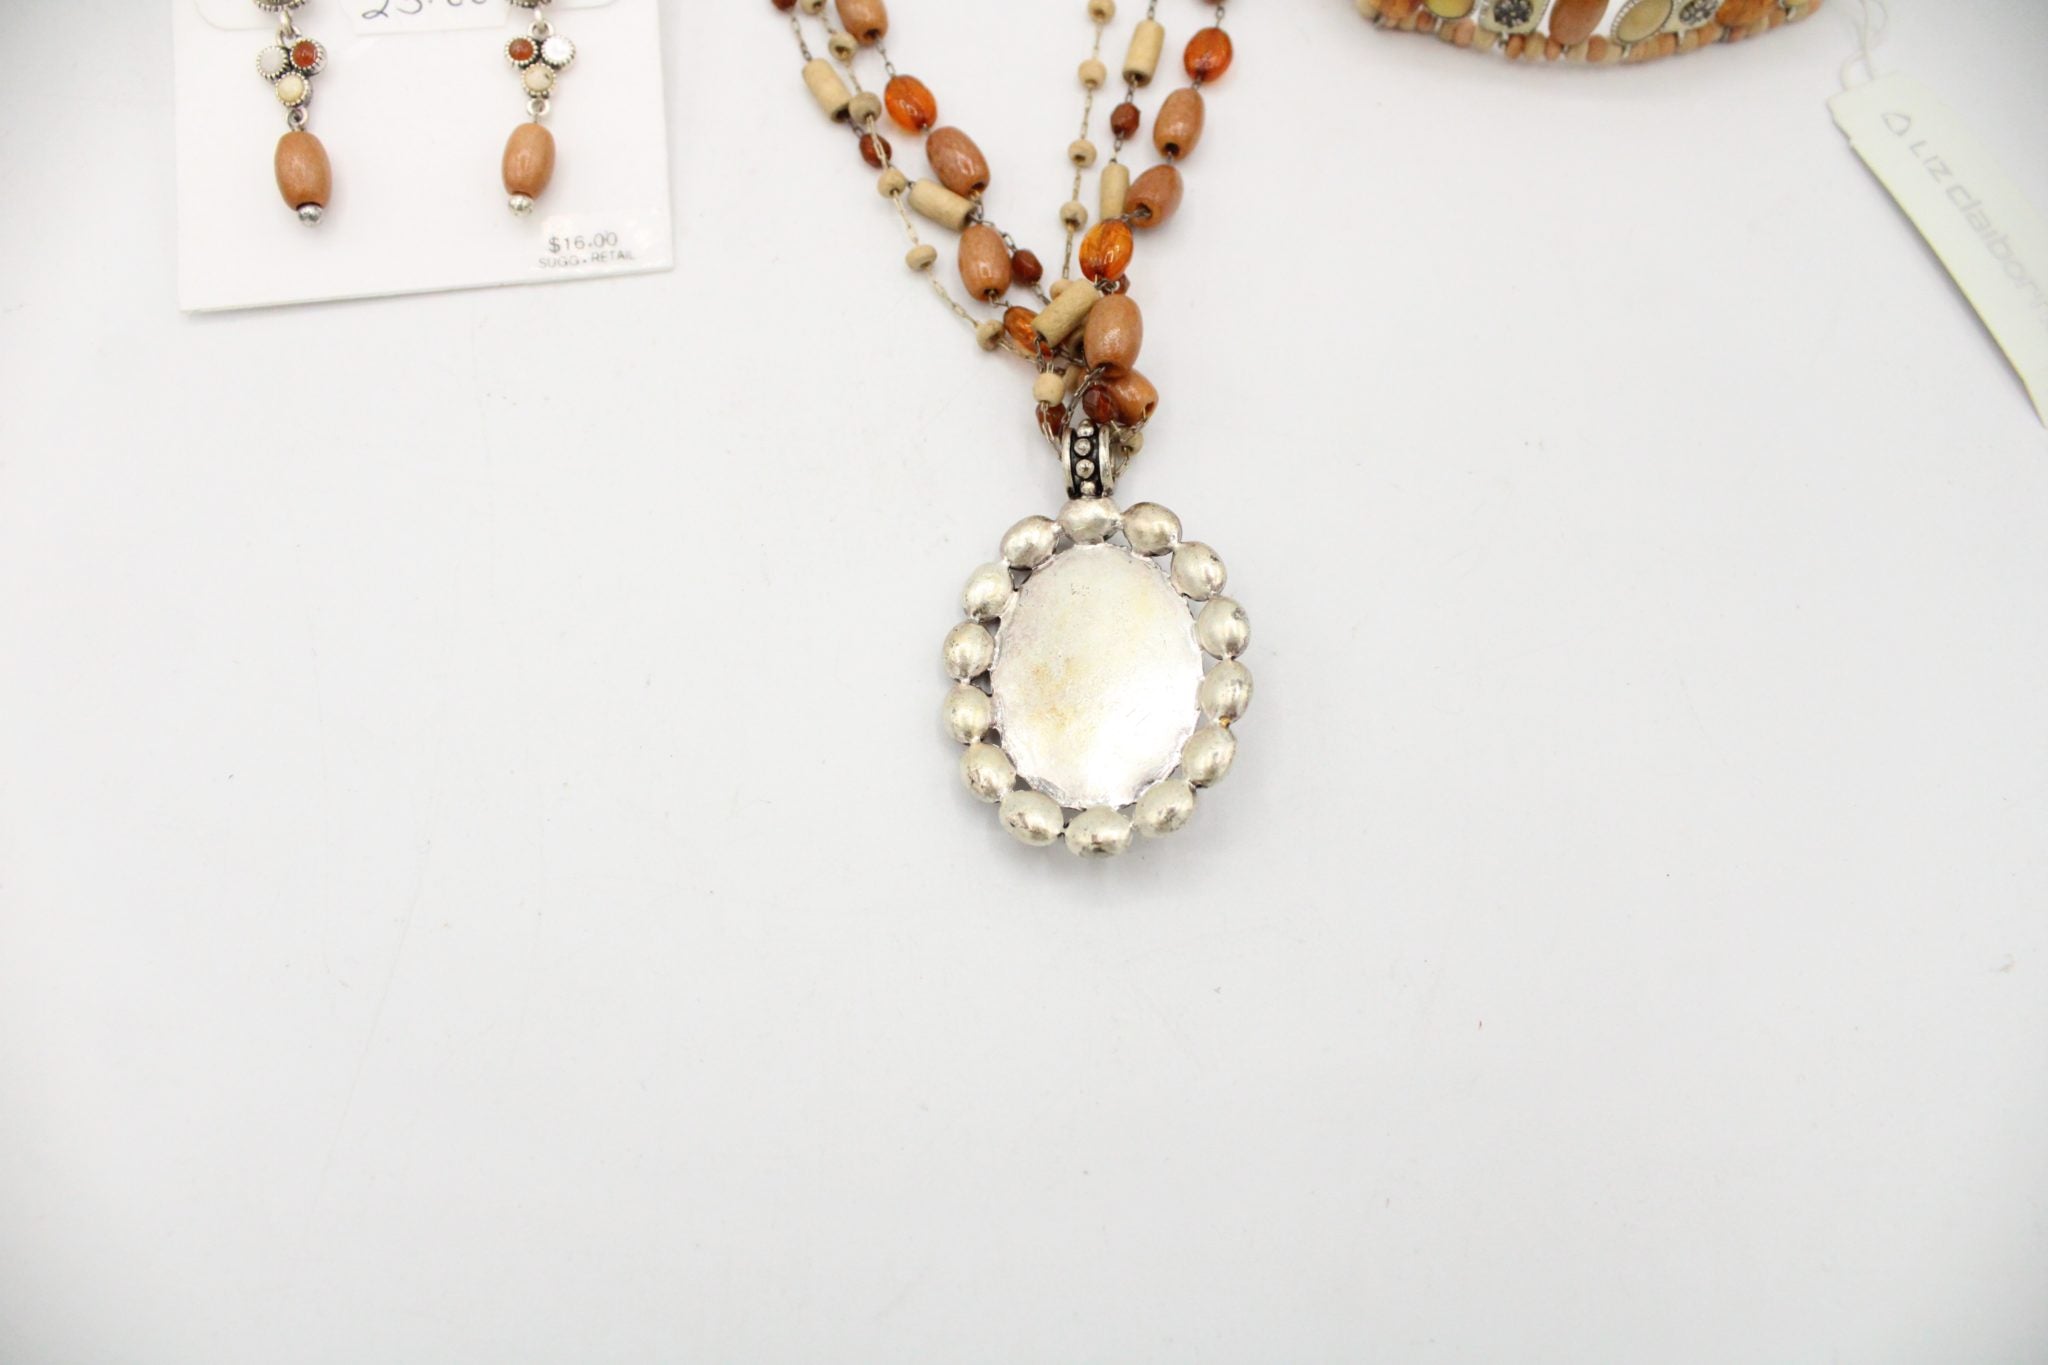 NEW Liz Claiborne Wooden Bead Jewelry Set